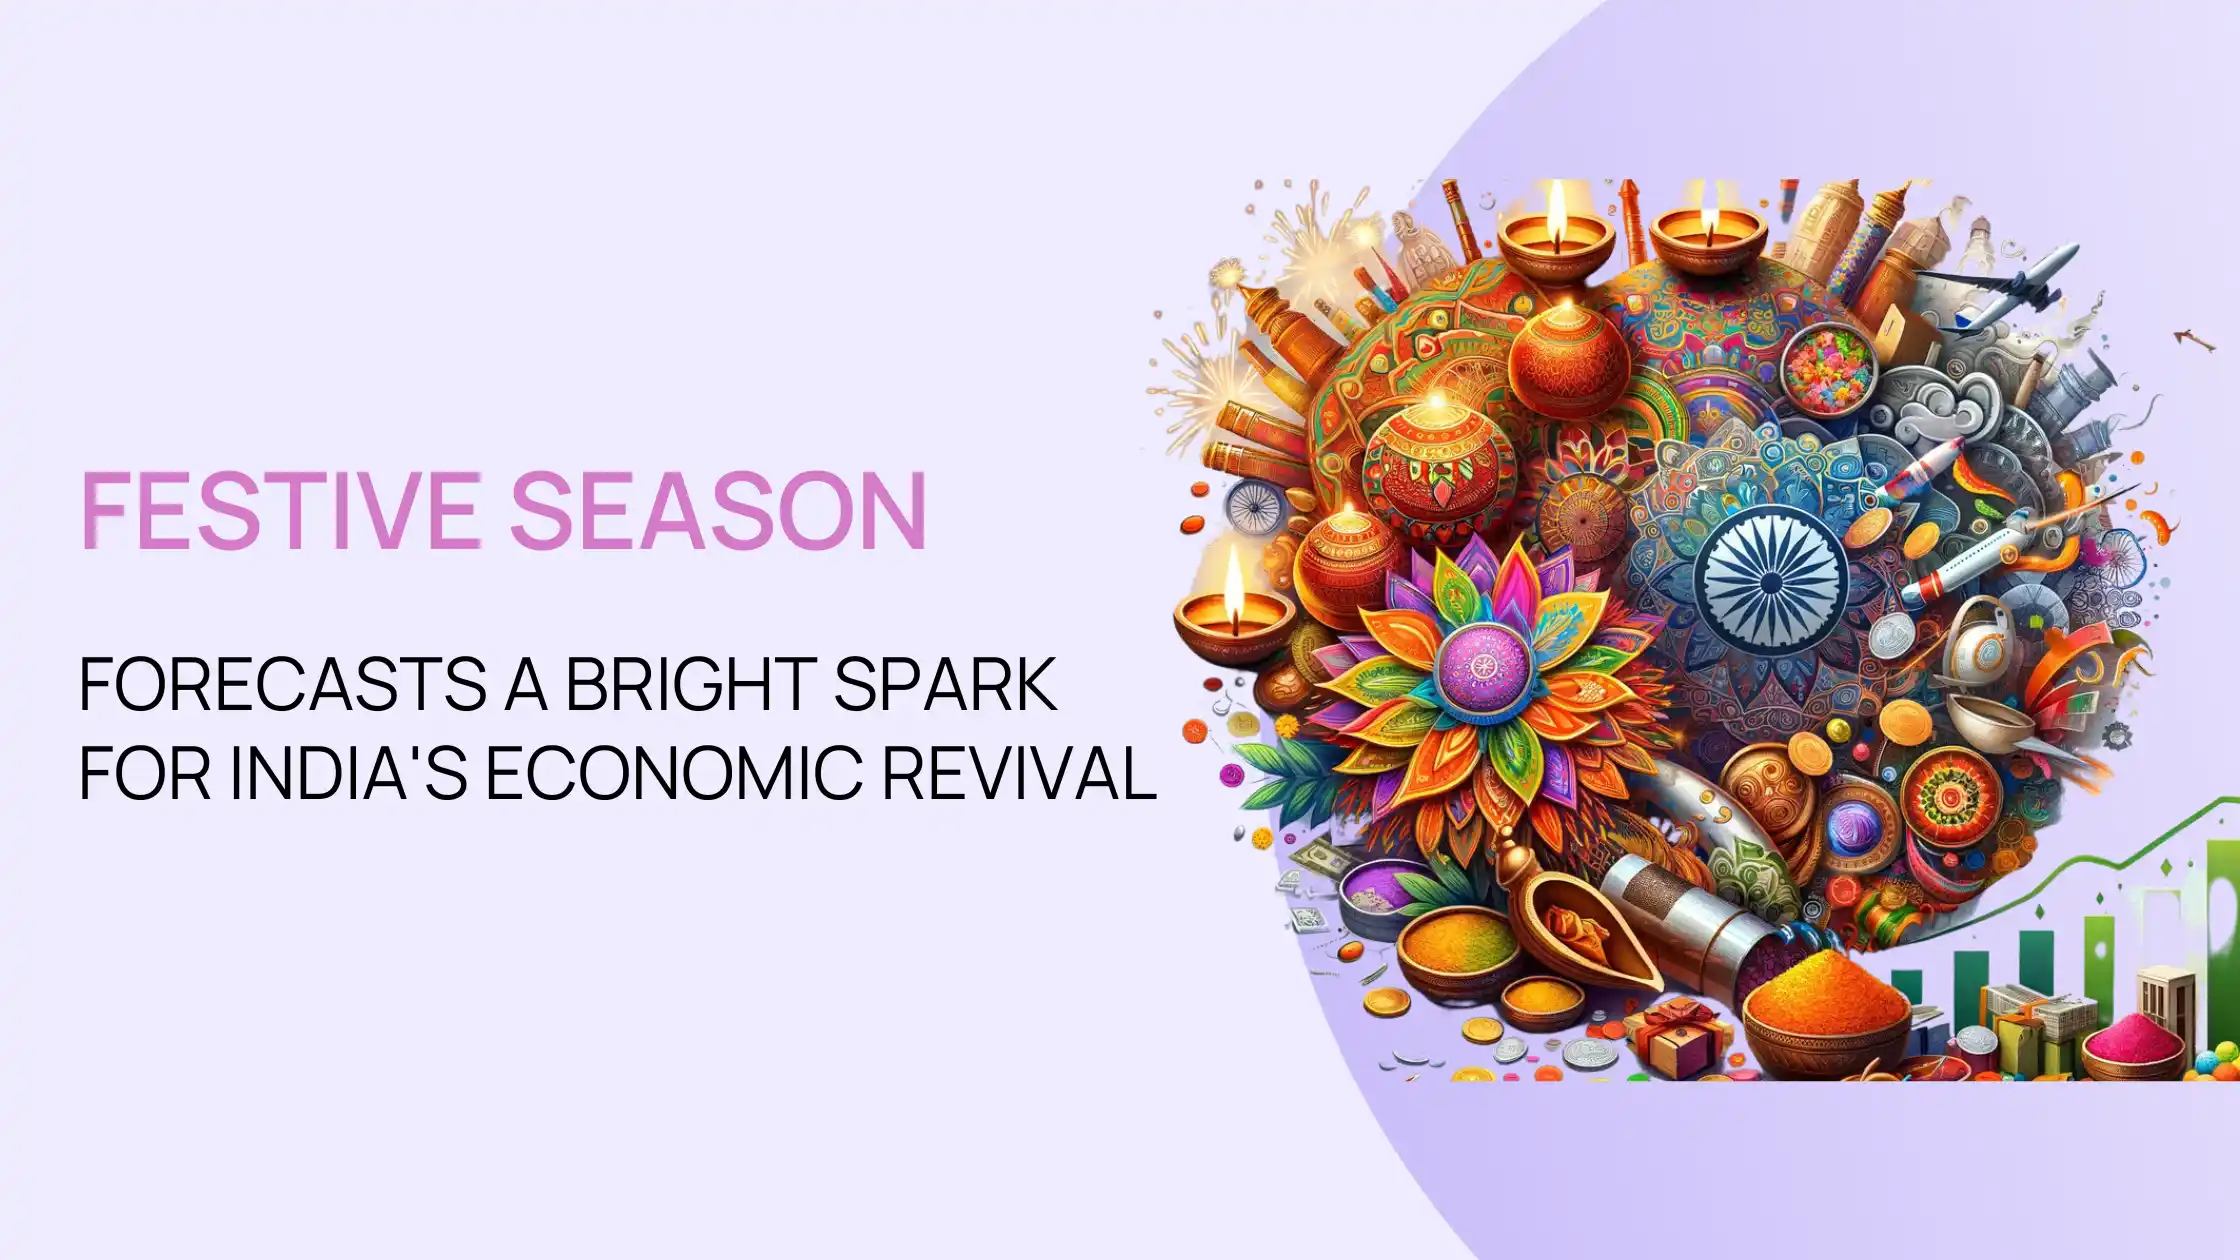 Festive Season Forecasts a Bright Spark for India's Economic Revival